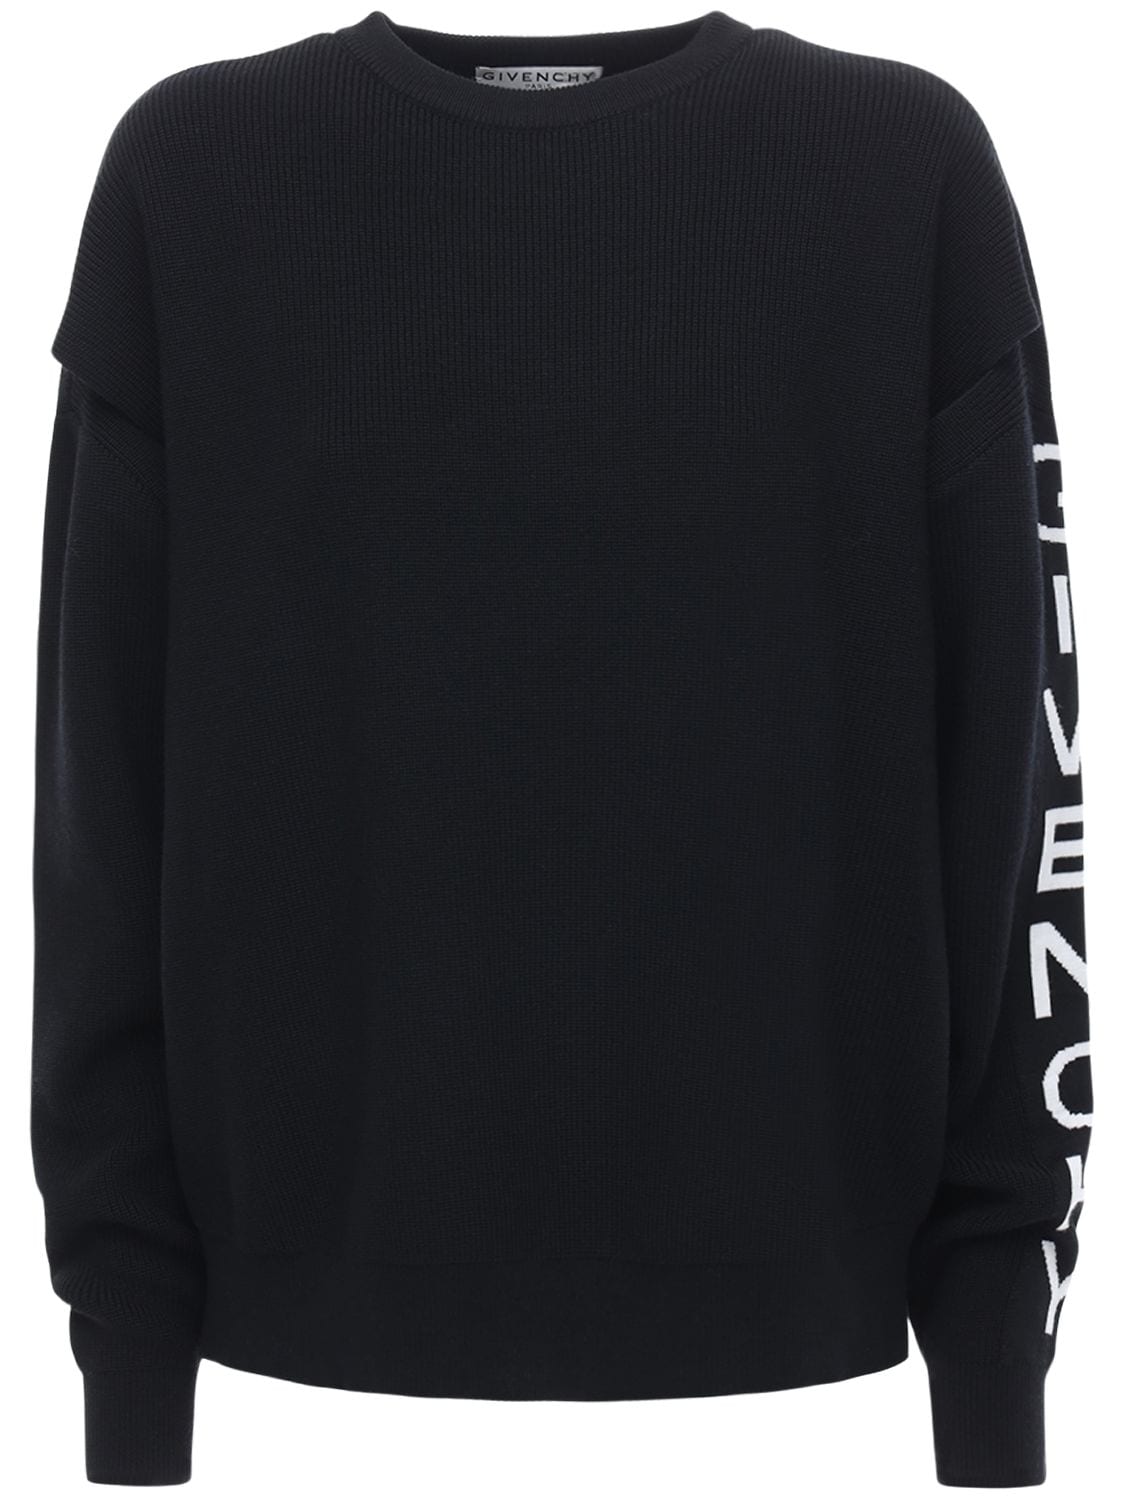 Givenchy - Oversize logo wool blend knit sweater - Black/White